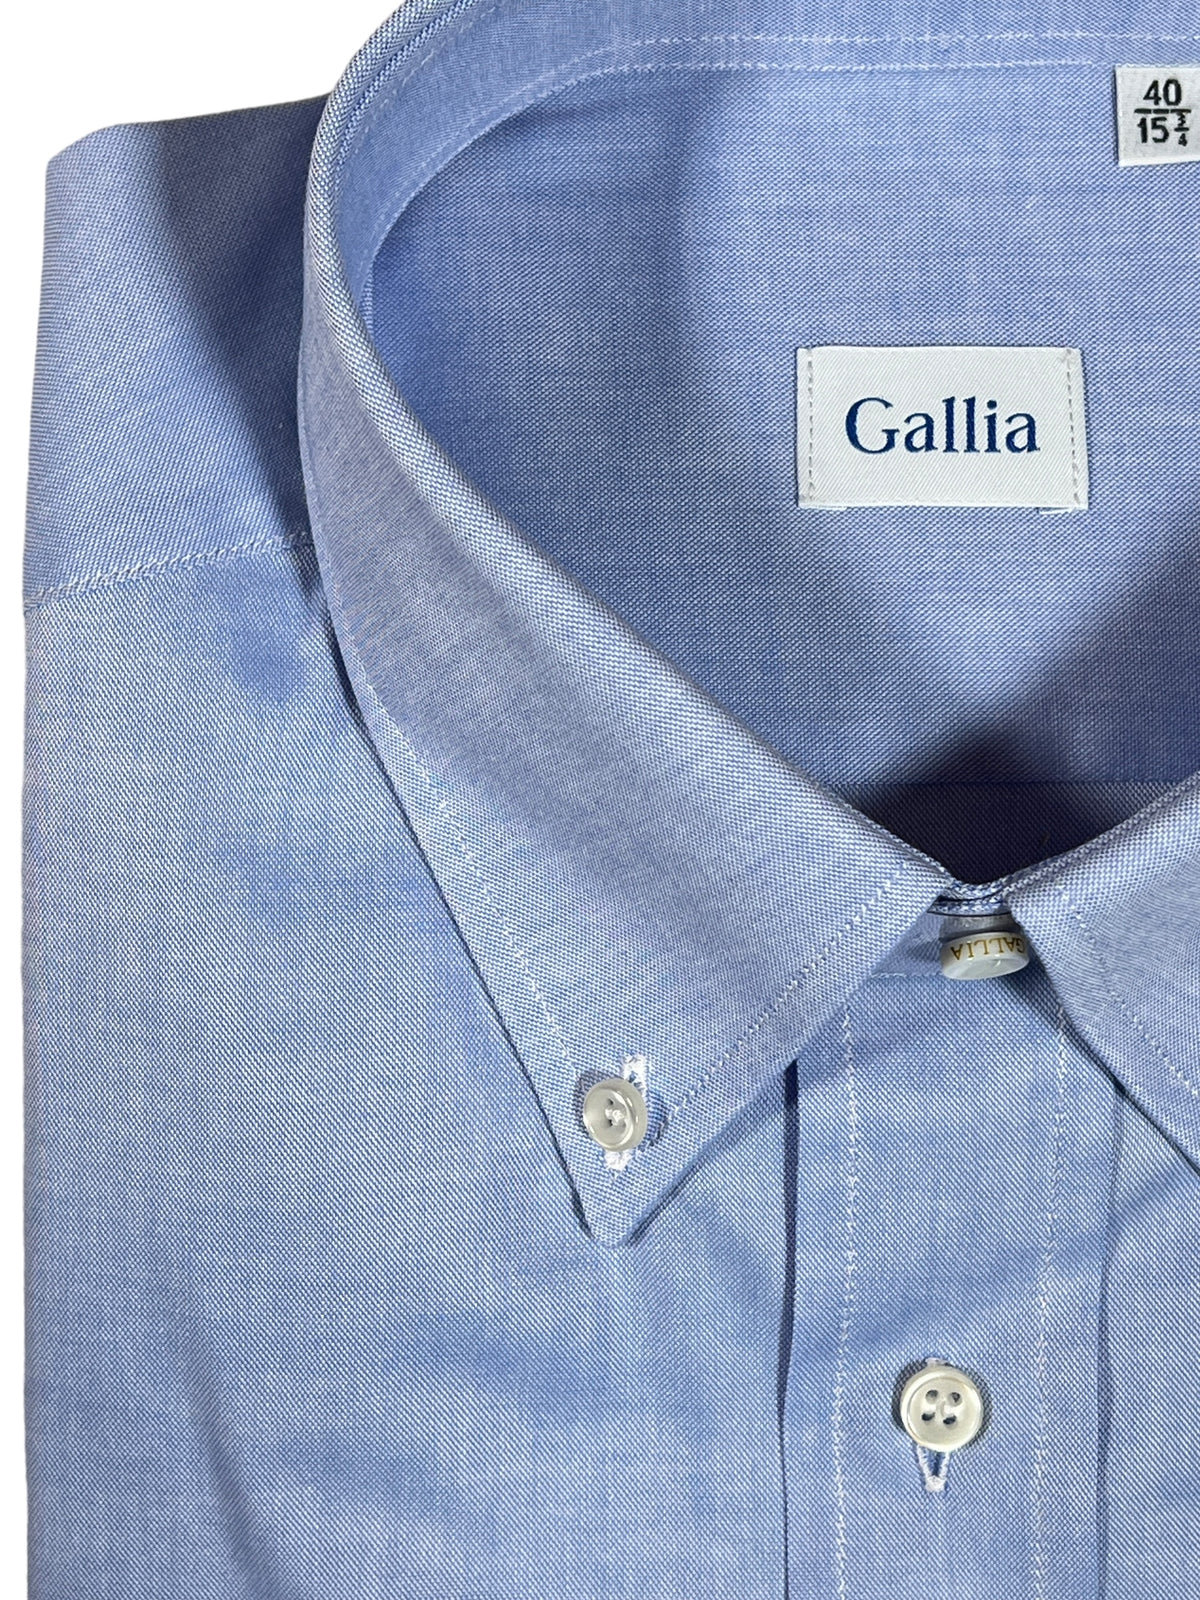 GALLIA MEN'S SHIRT - SOLID BLUE OXFORD